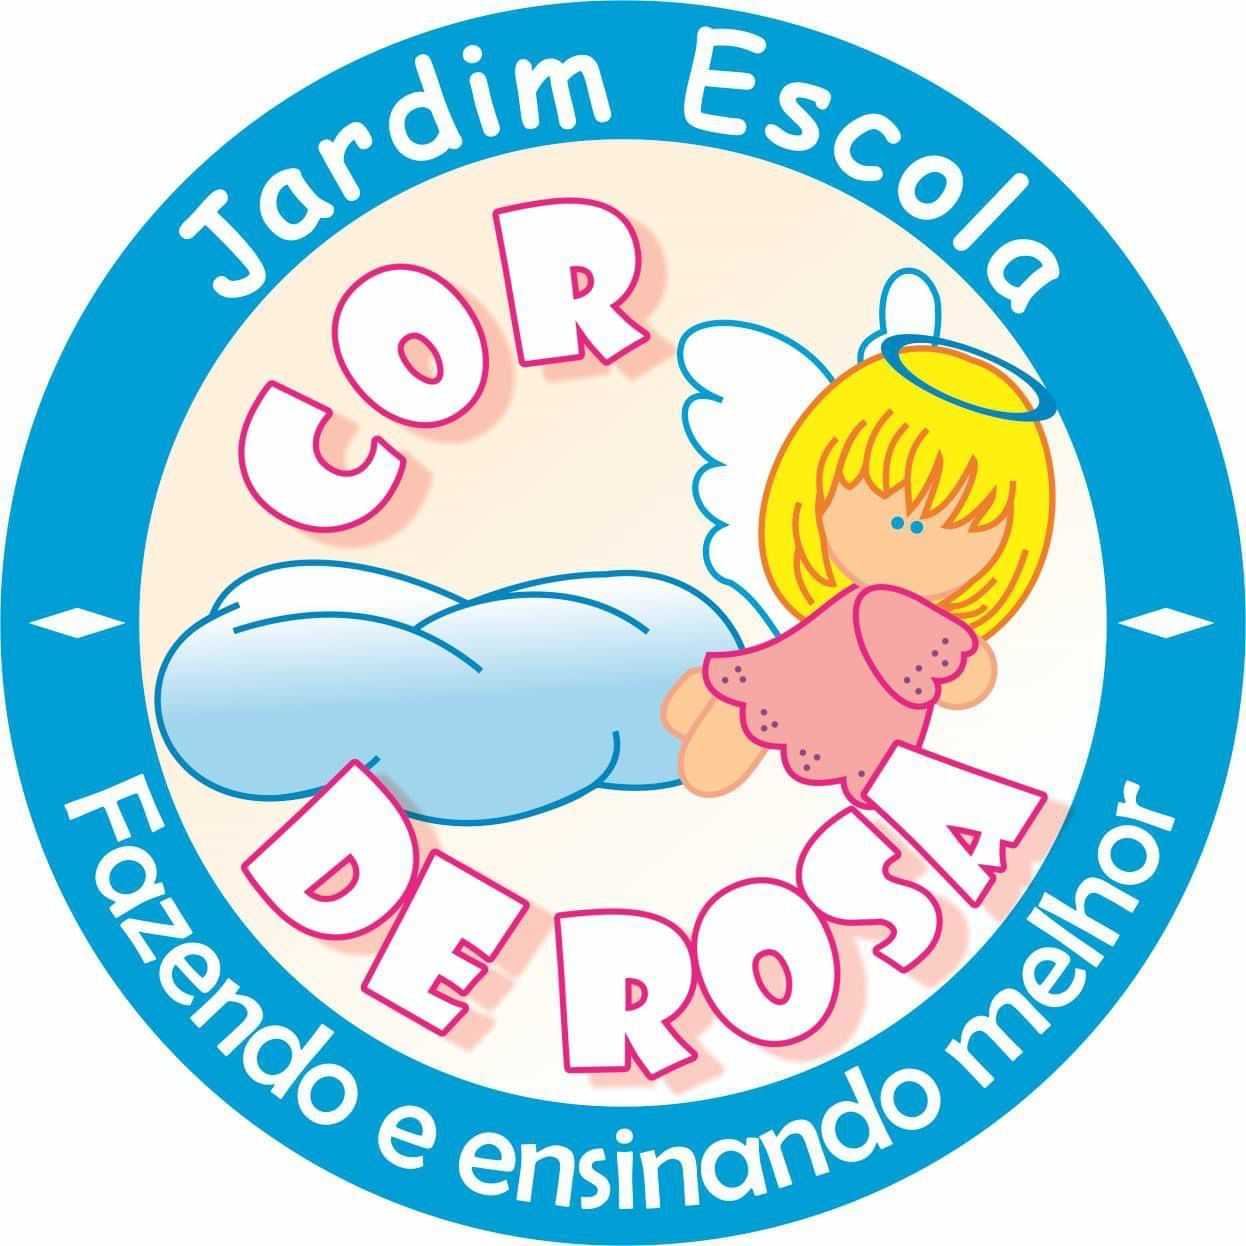  Jardim Escola Cor De Rosa 